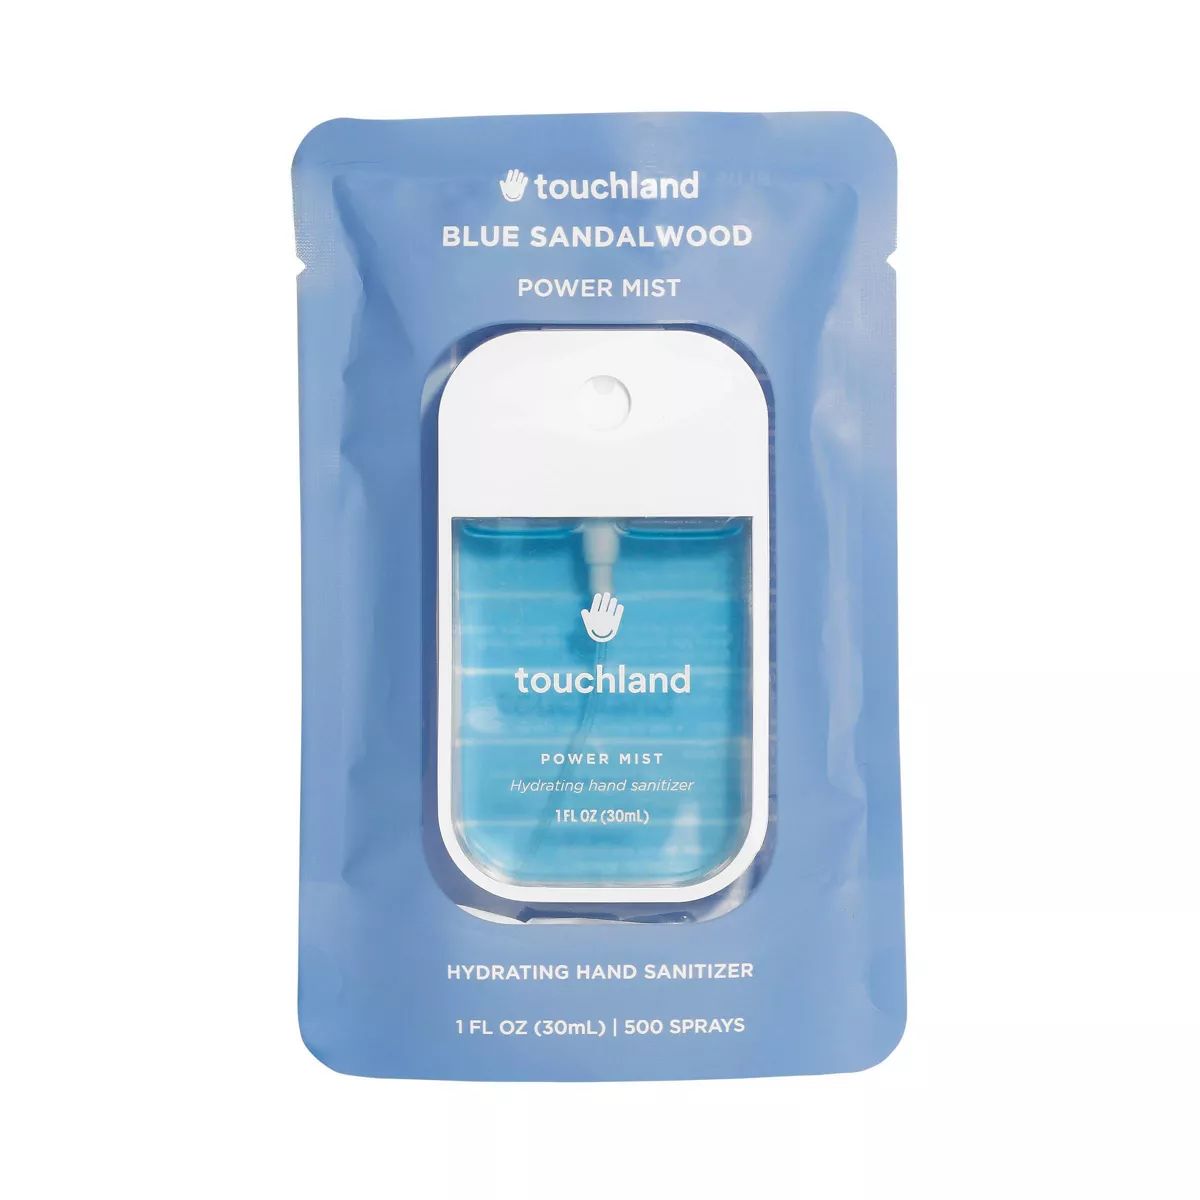 Touchland Power Mist Hydrating Hand Sanitizer - Blue Sandalwood - 1 fl oz/500 sprays | Target